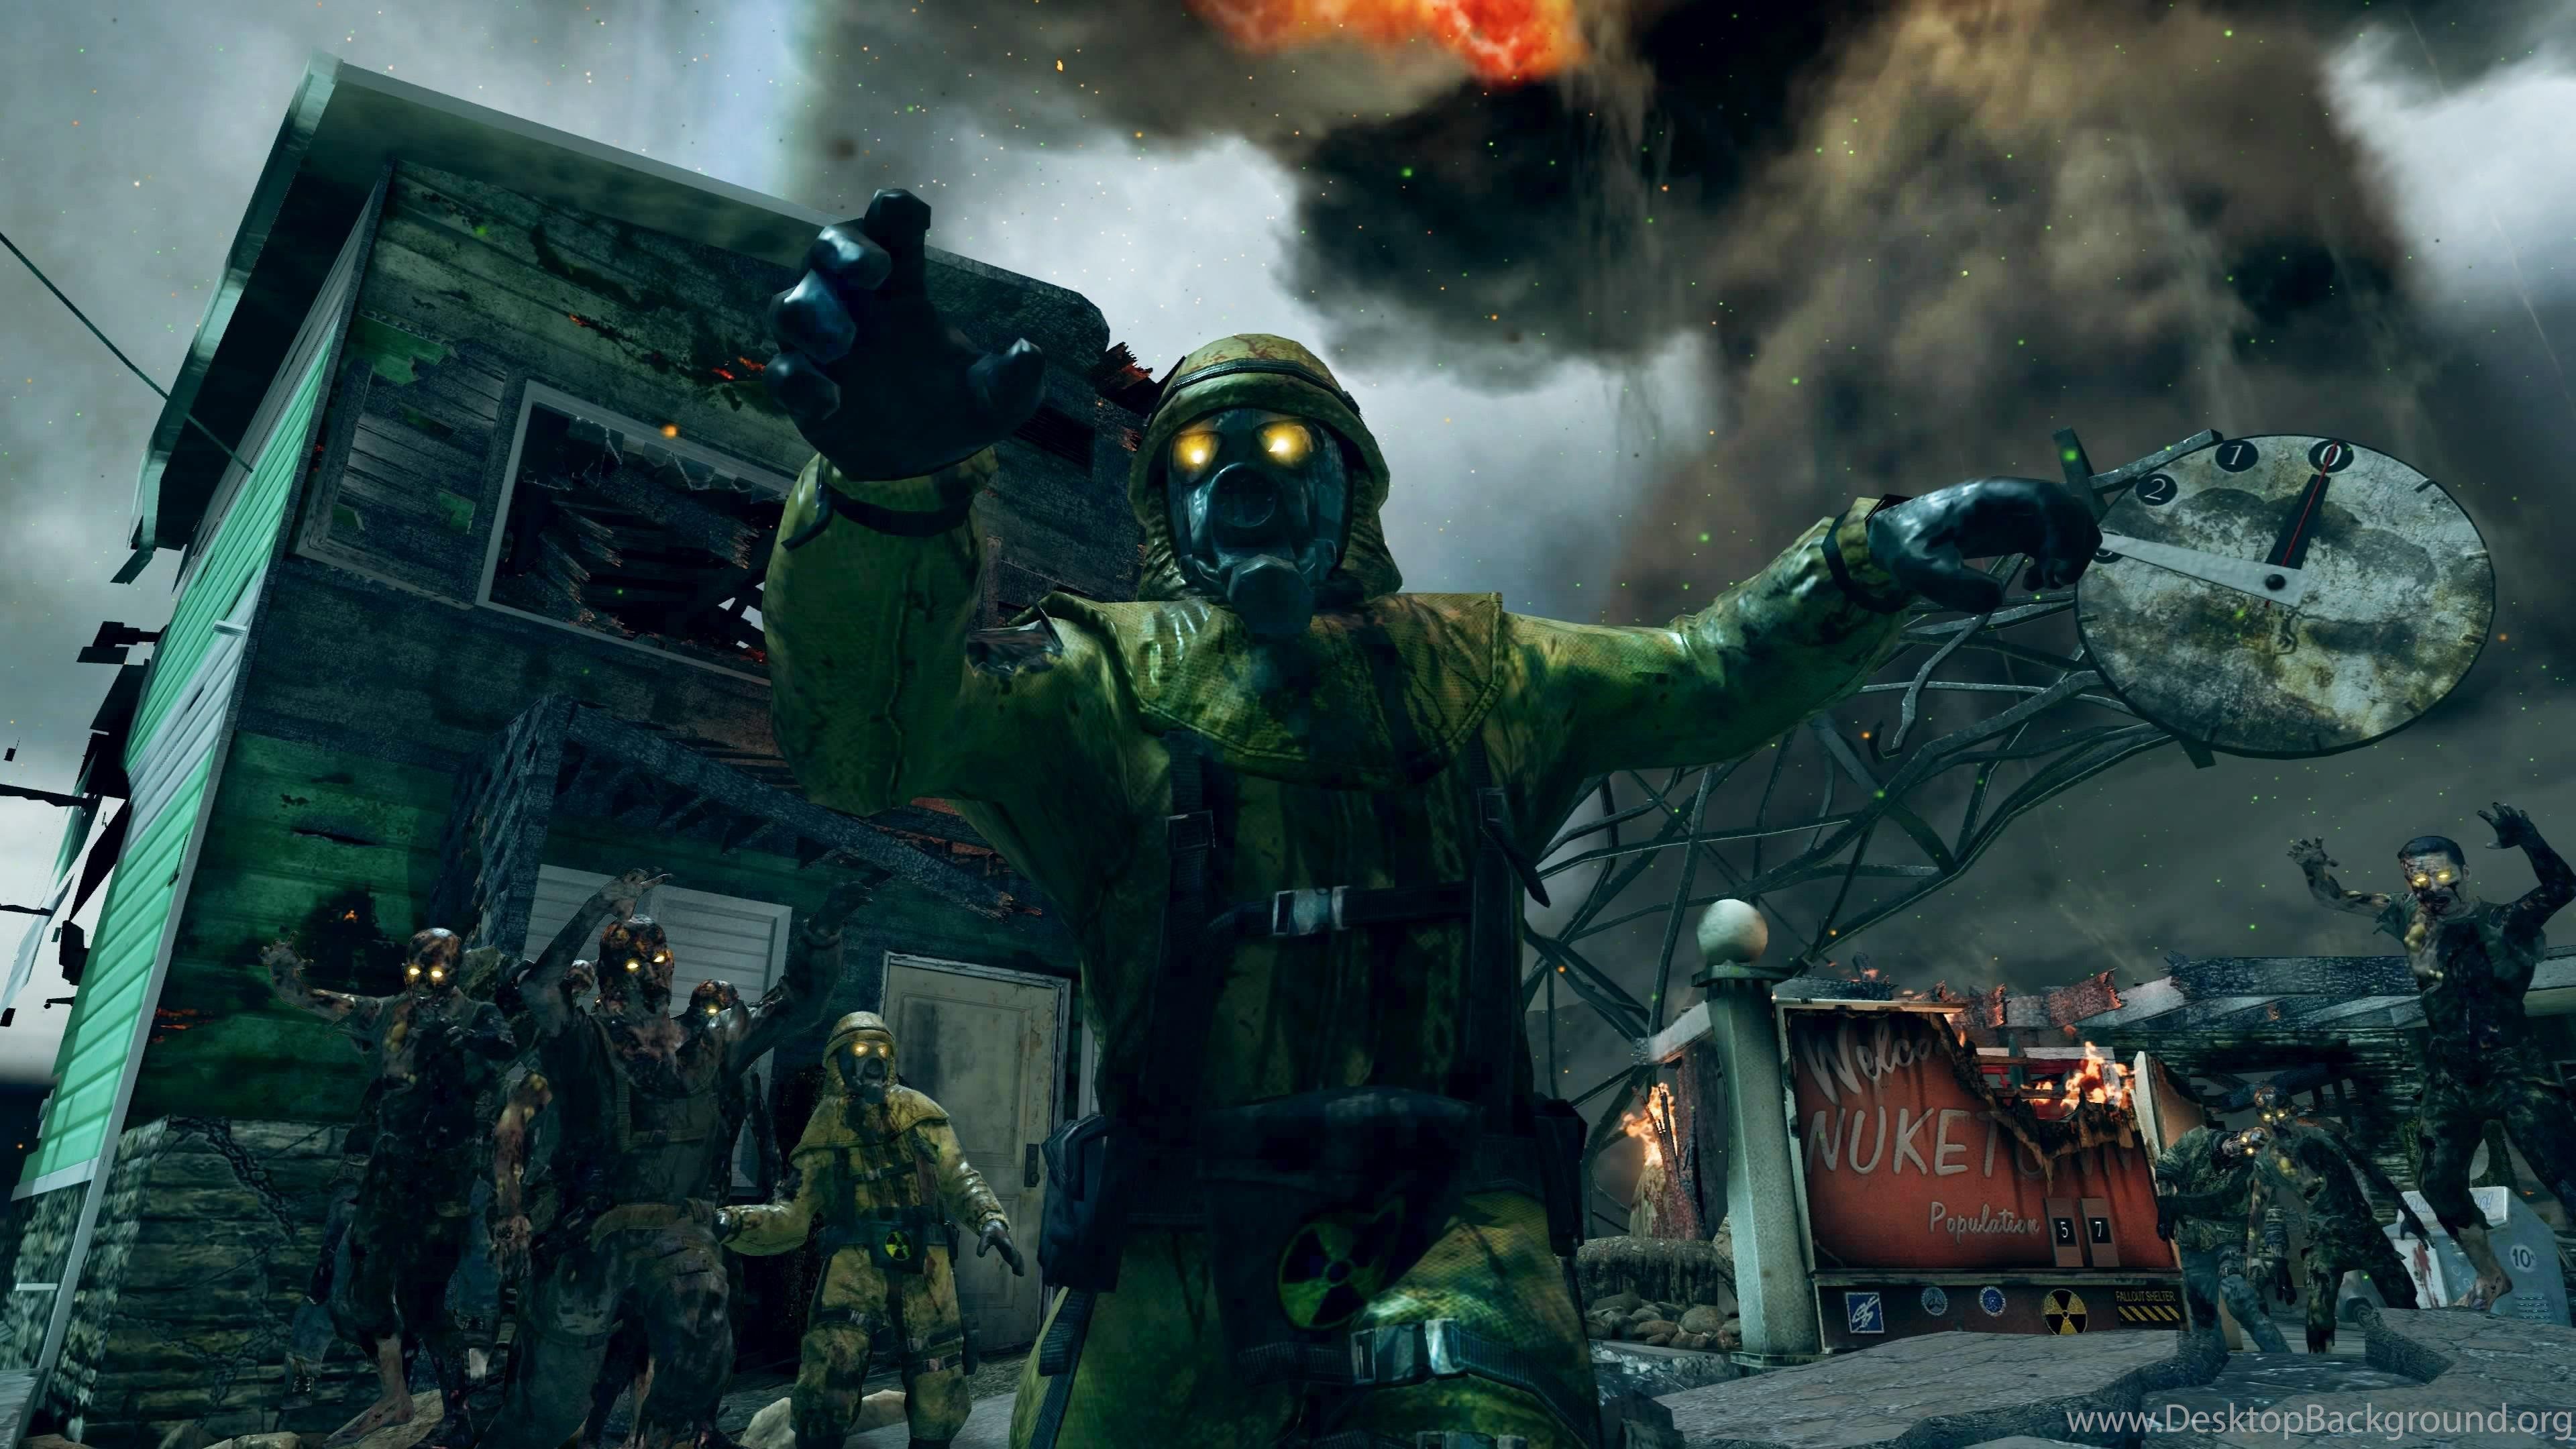 Call Of Duty Black Ops 2 Zombies Wallpaper Image Gallery Photonesta Desktop Background